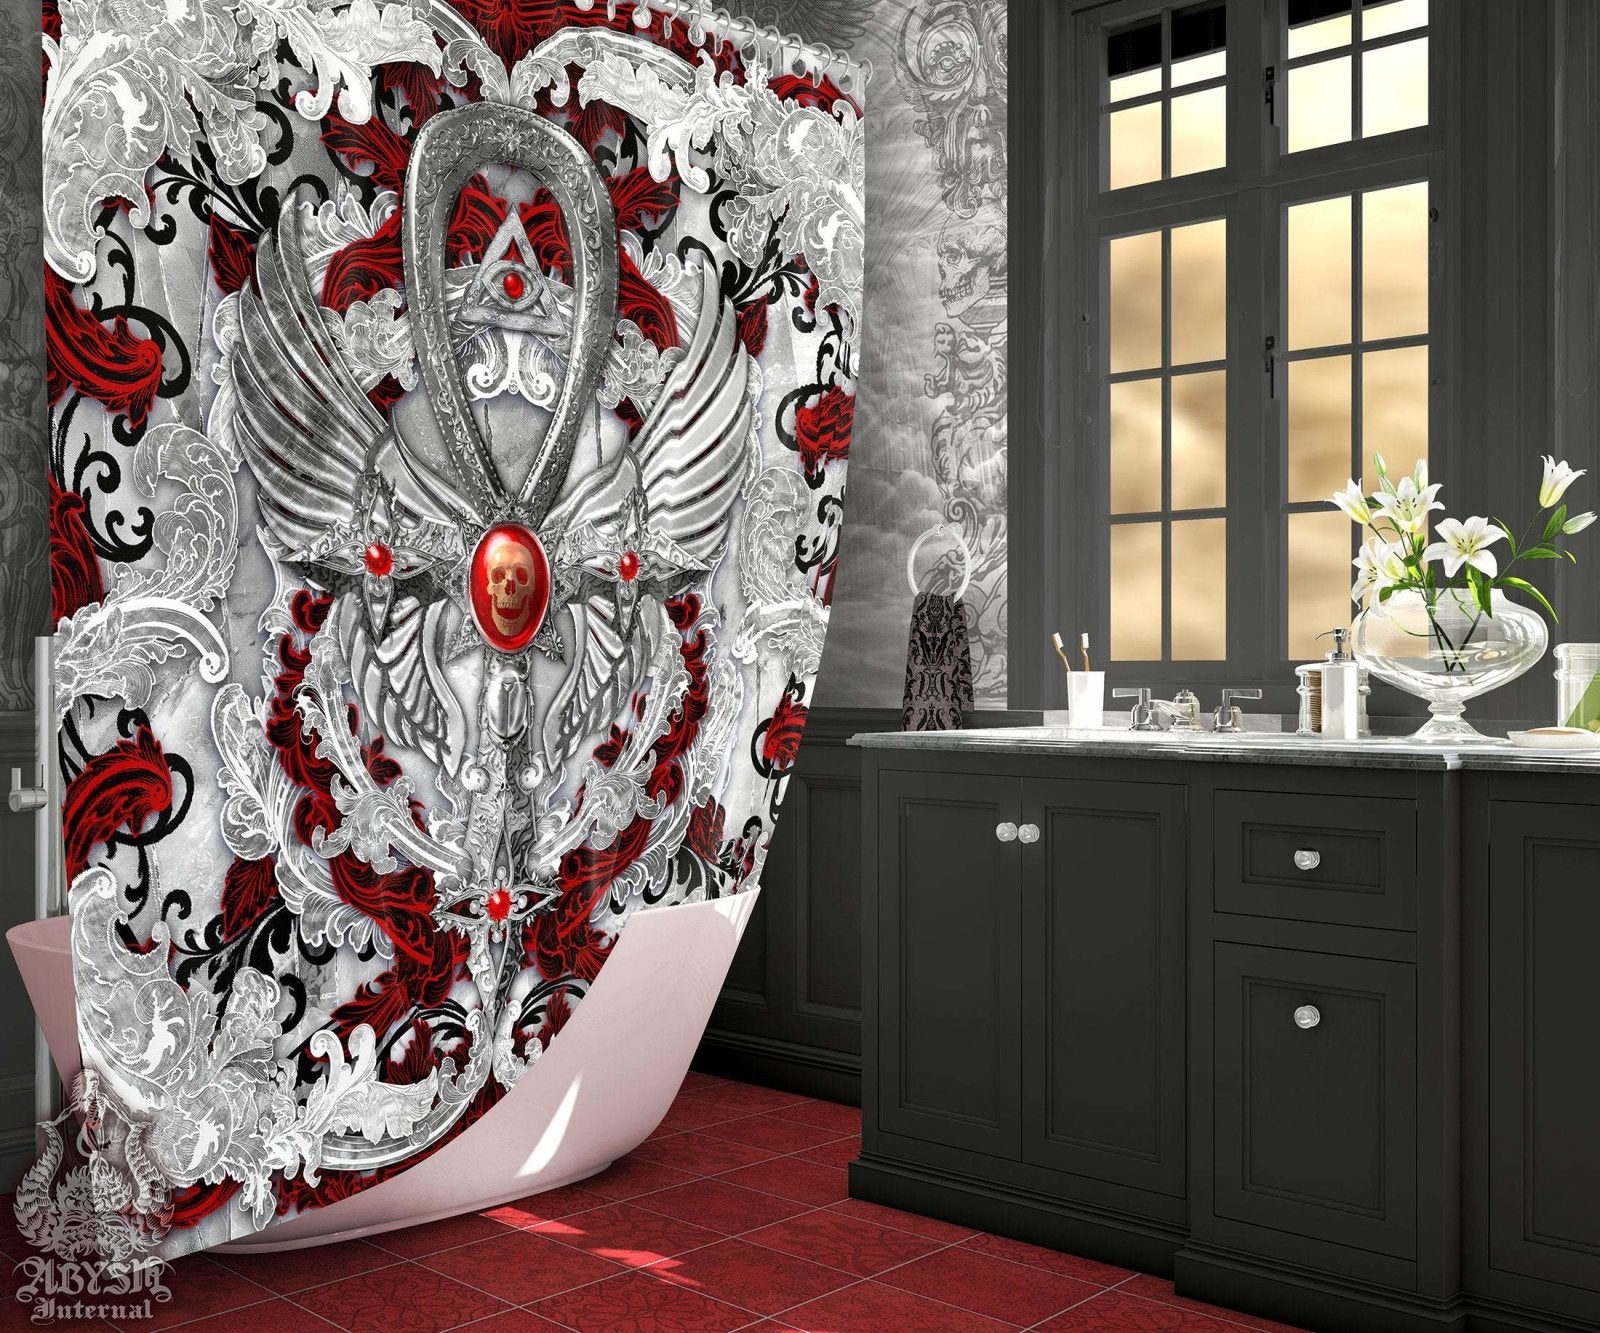 Gothic Shower Curtain, Ankh Cross, Dark Bathroom Decor, Occult - Ornamented, Bloody White Goth - Abysm Internal